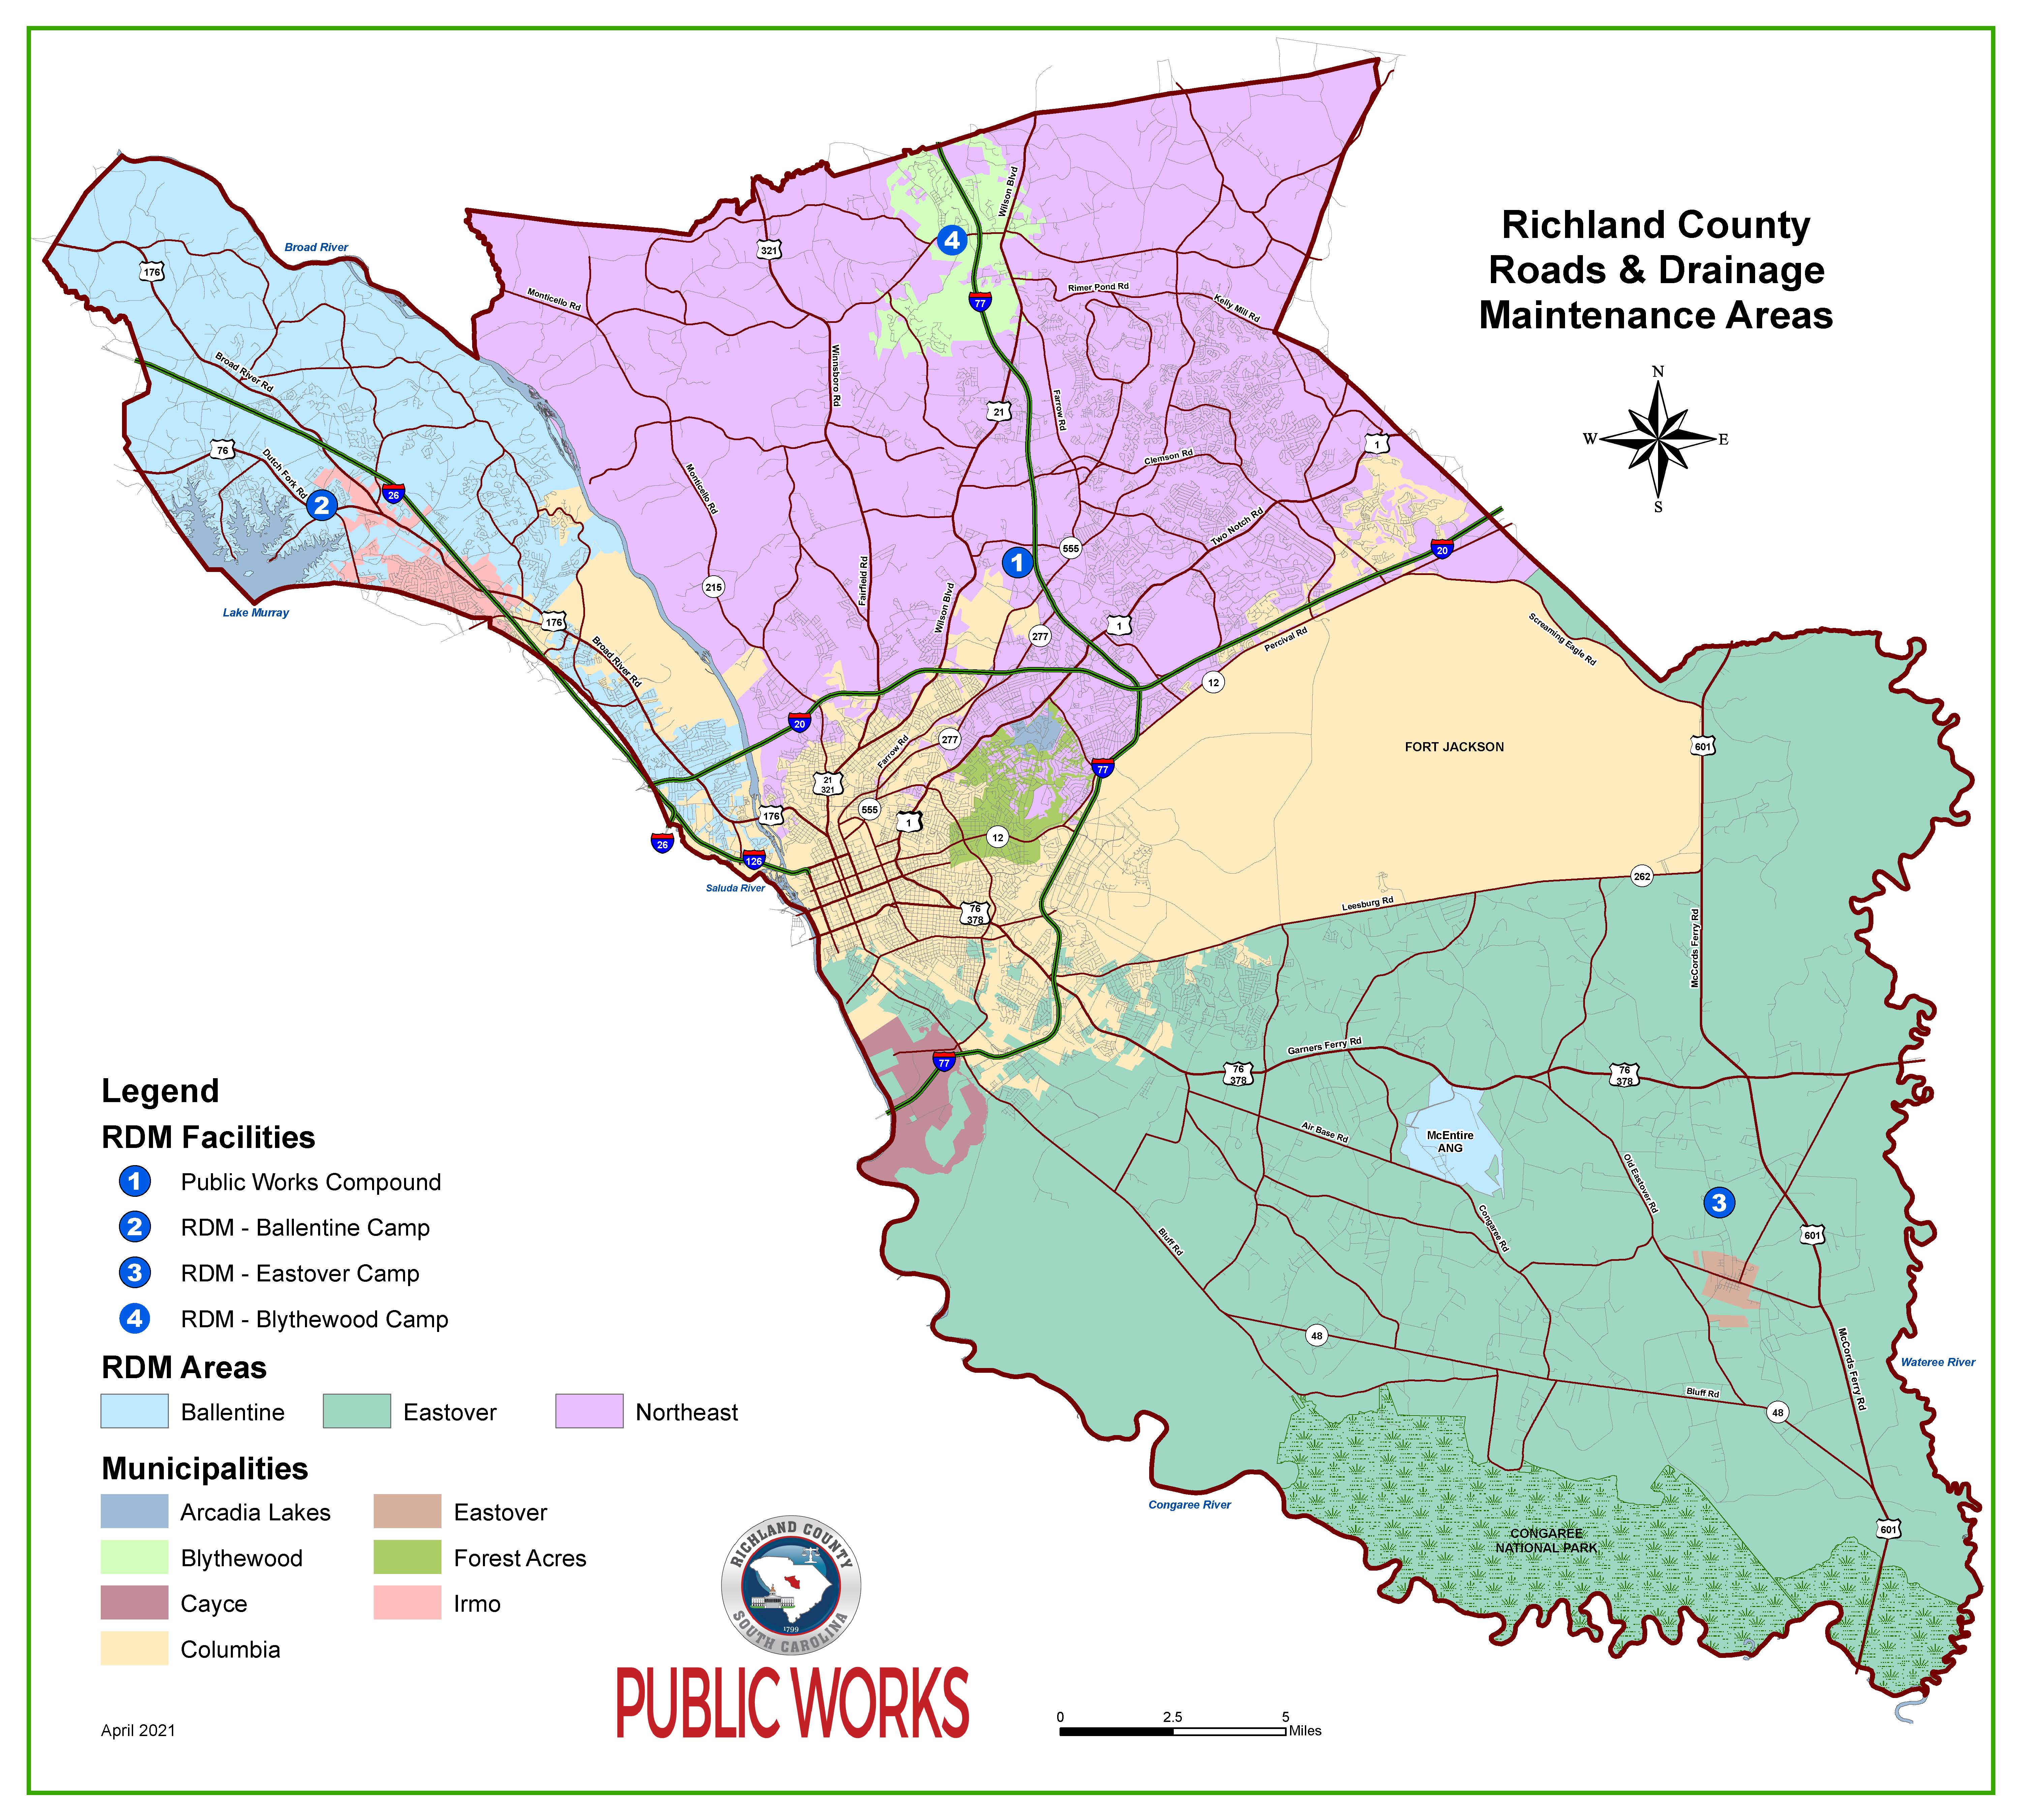 Richland County Roads & Drainage Maintenance Areas